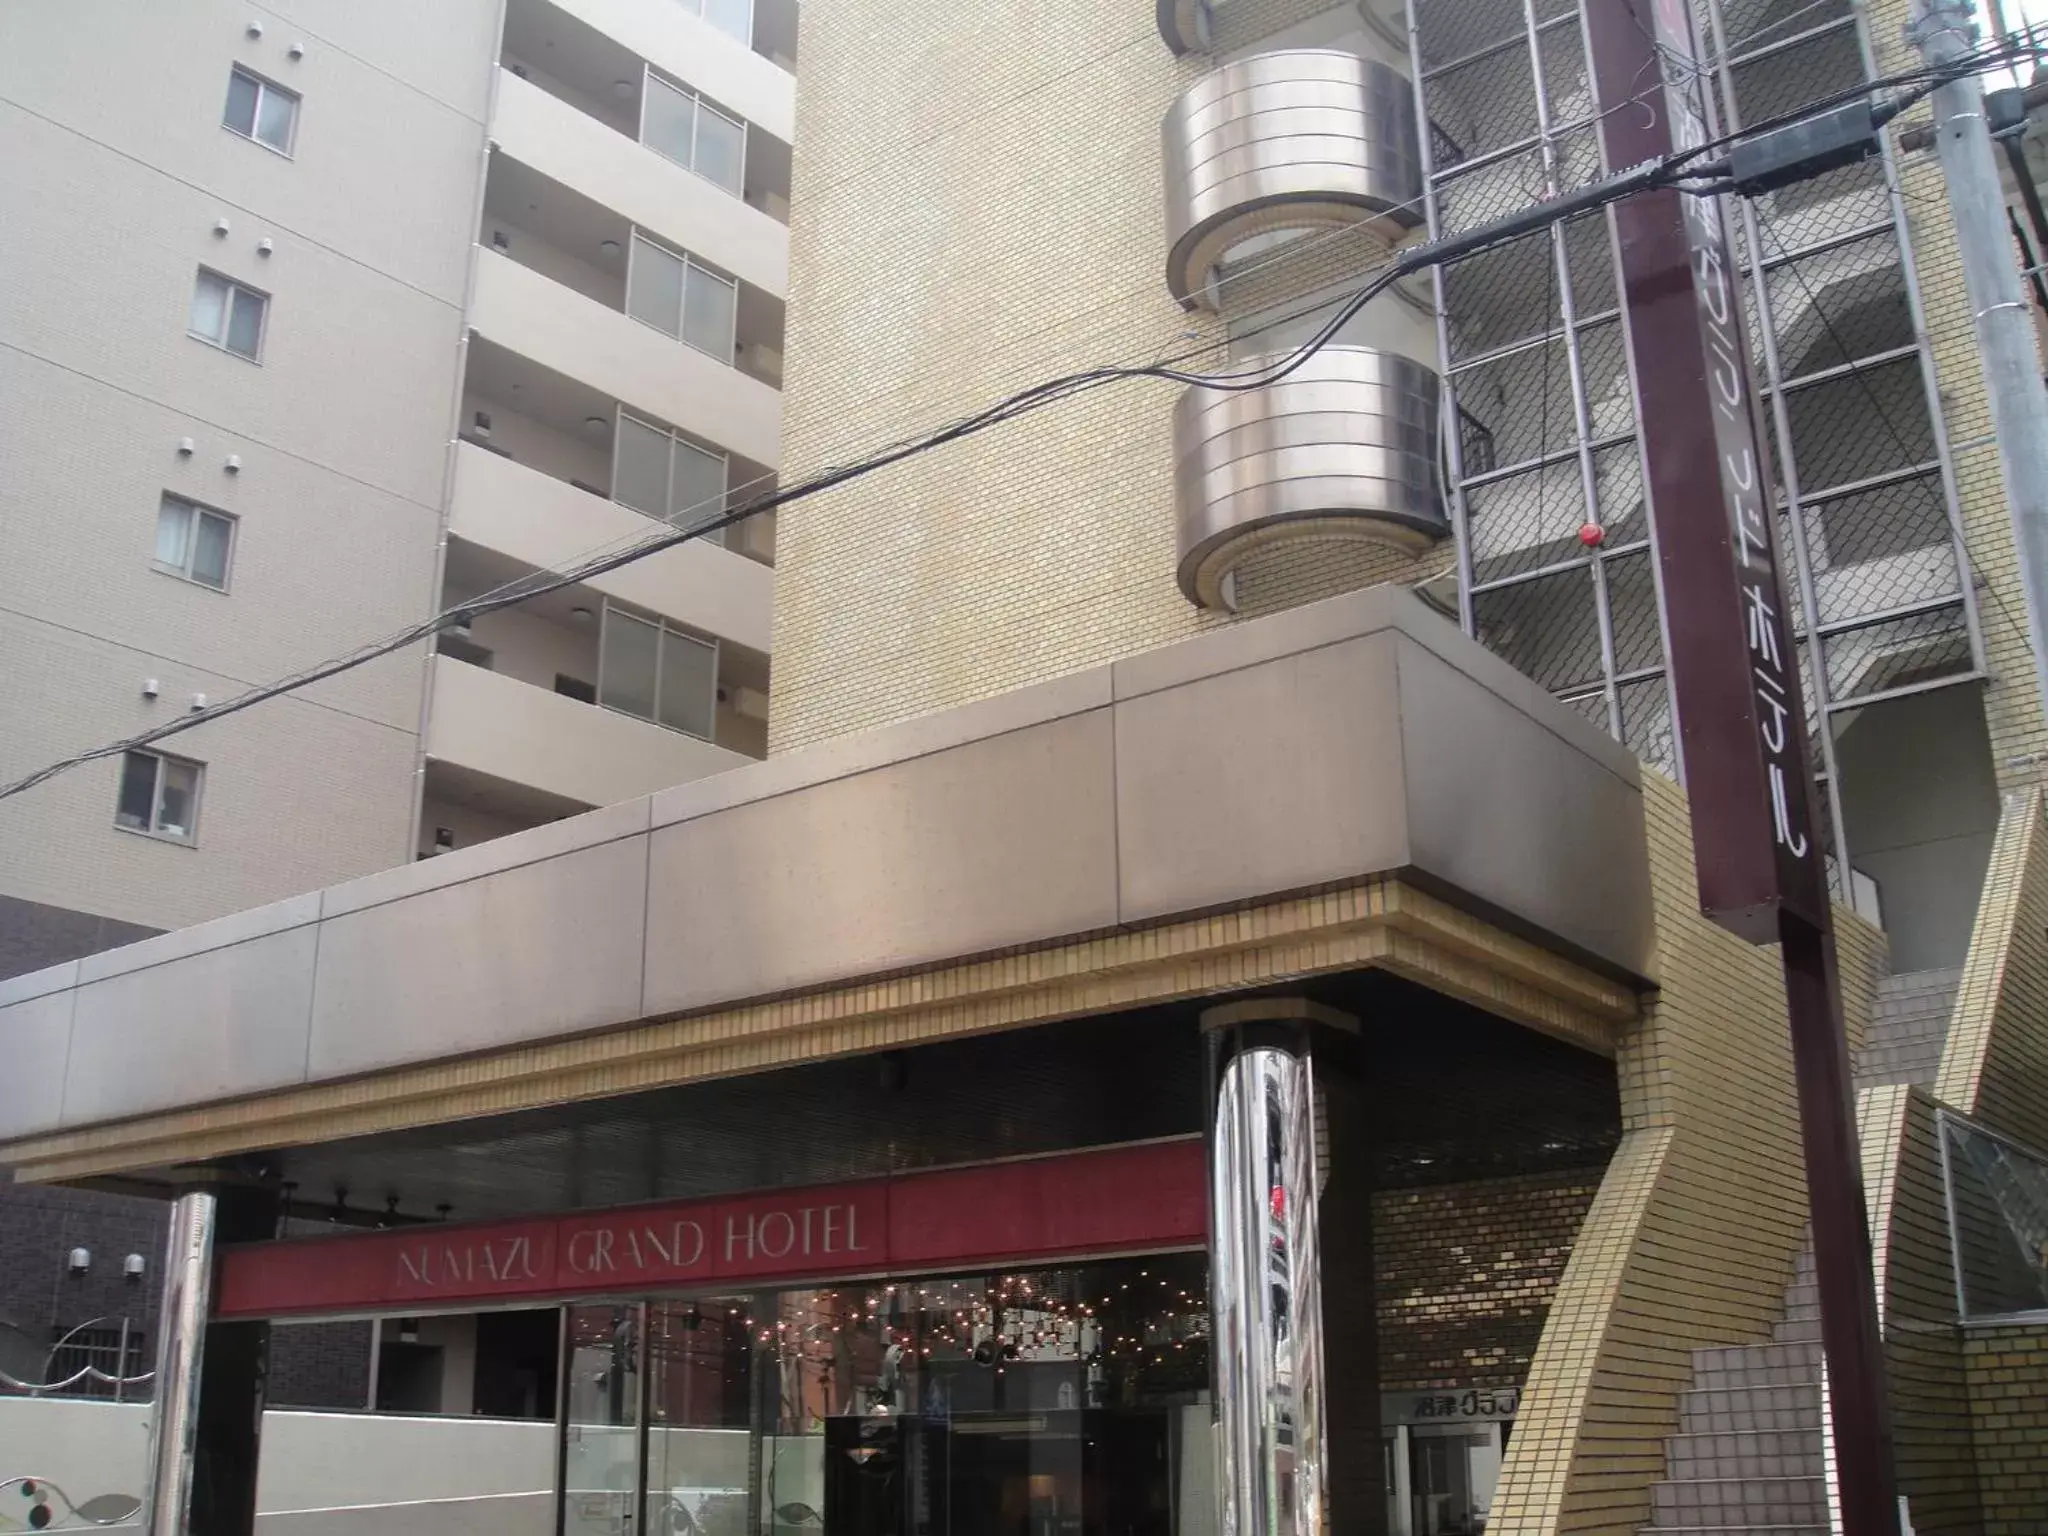 Facade/entrance, Property Building in Numazu Grand Hotel